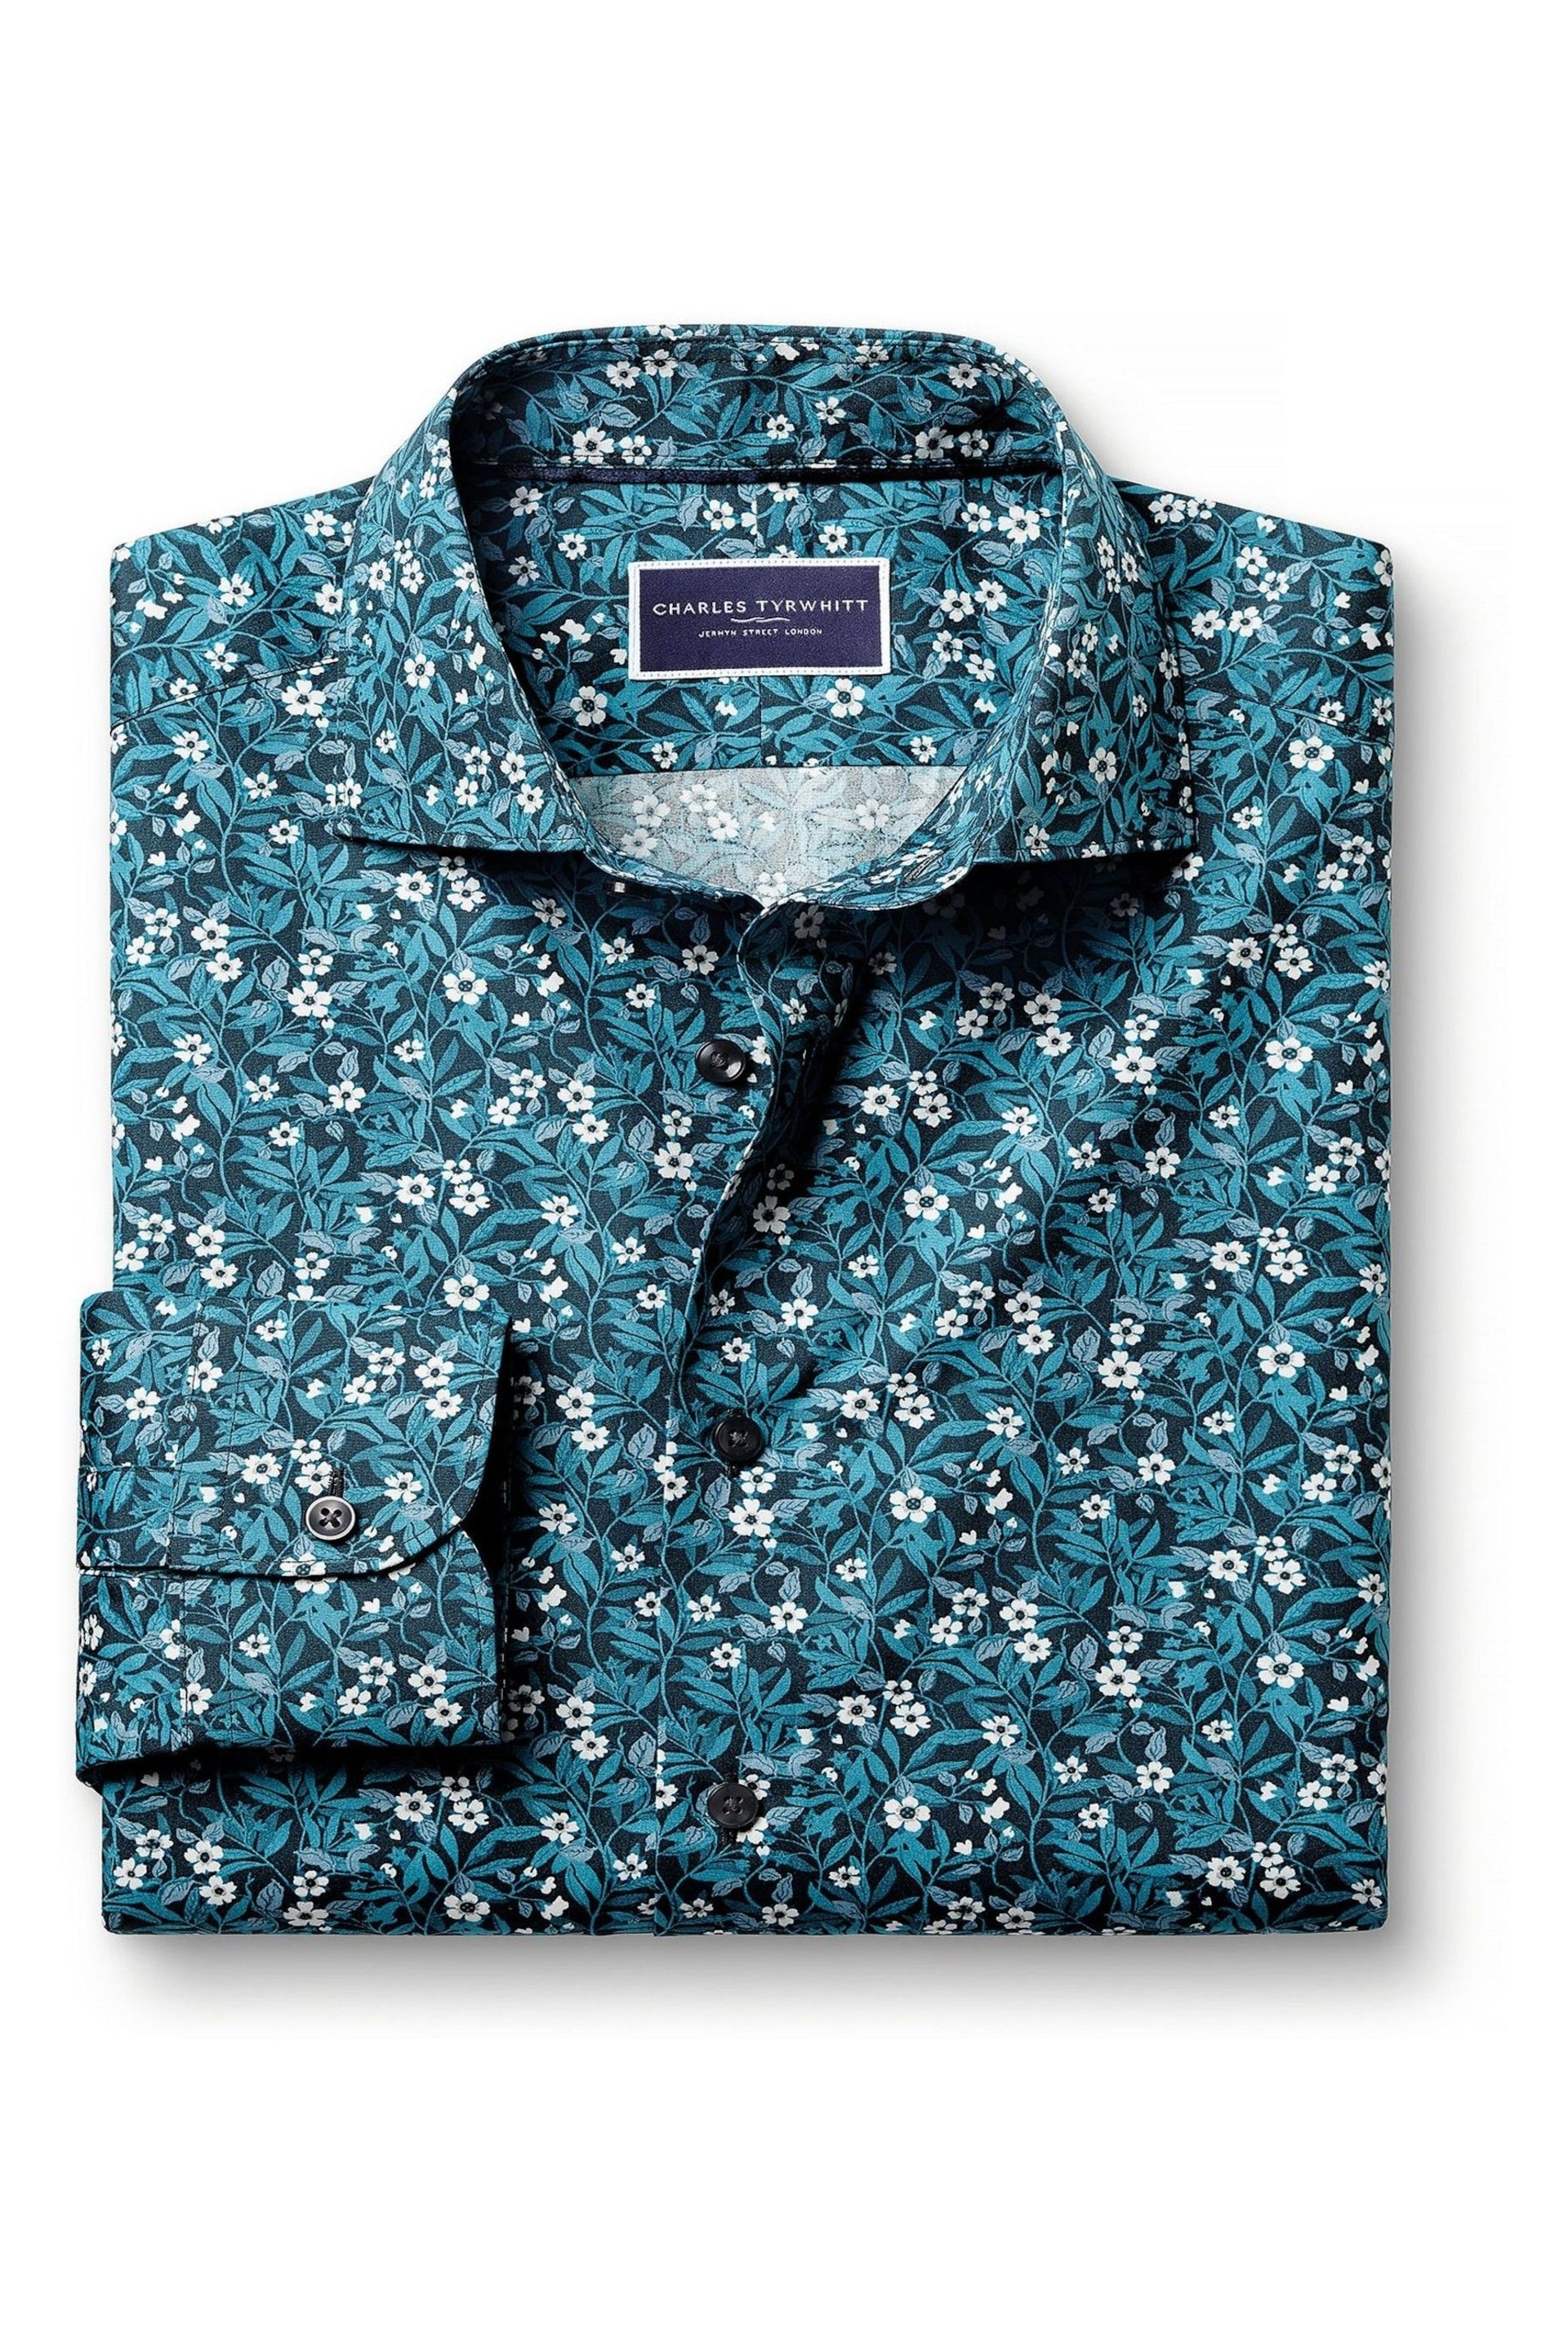 Charles Tyrwhitt Green Slim Fit Liberty Fabric Floral Print Shirt - Image 5 of 7